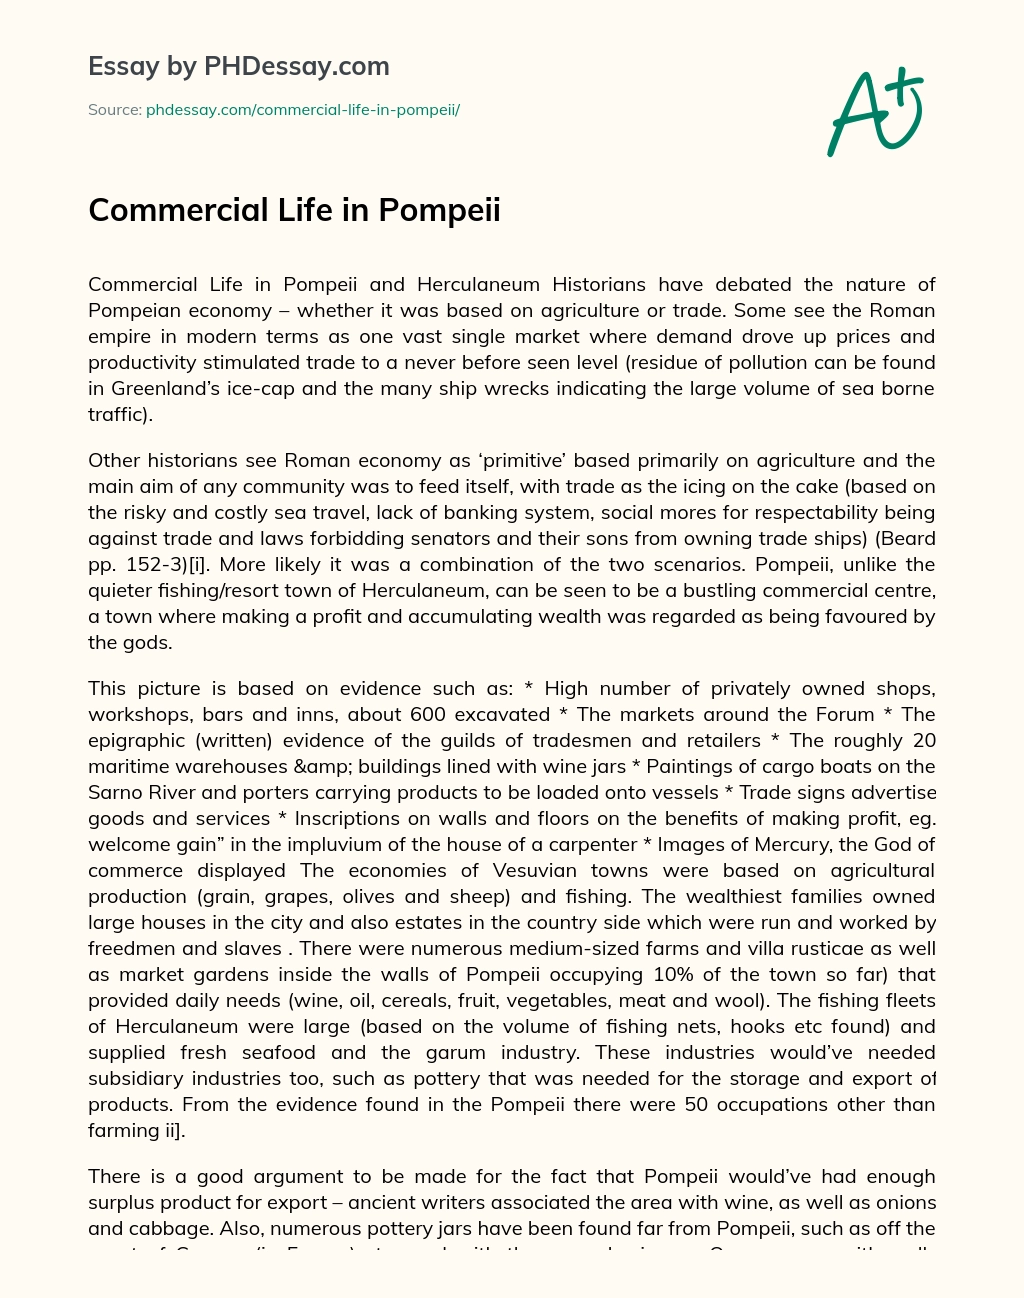 Commercial life in Pompeii essay